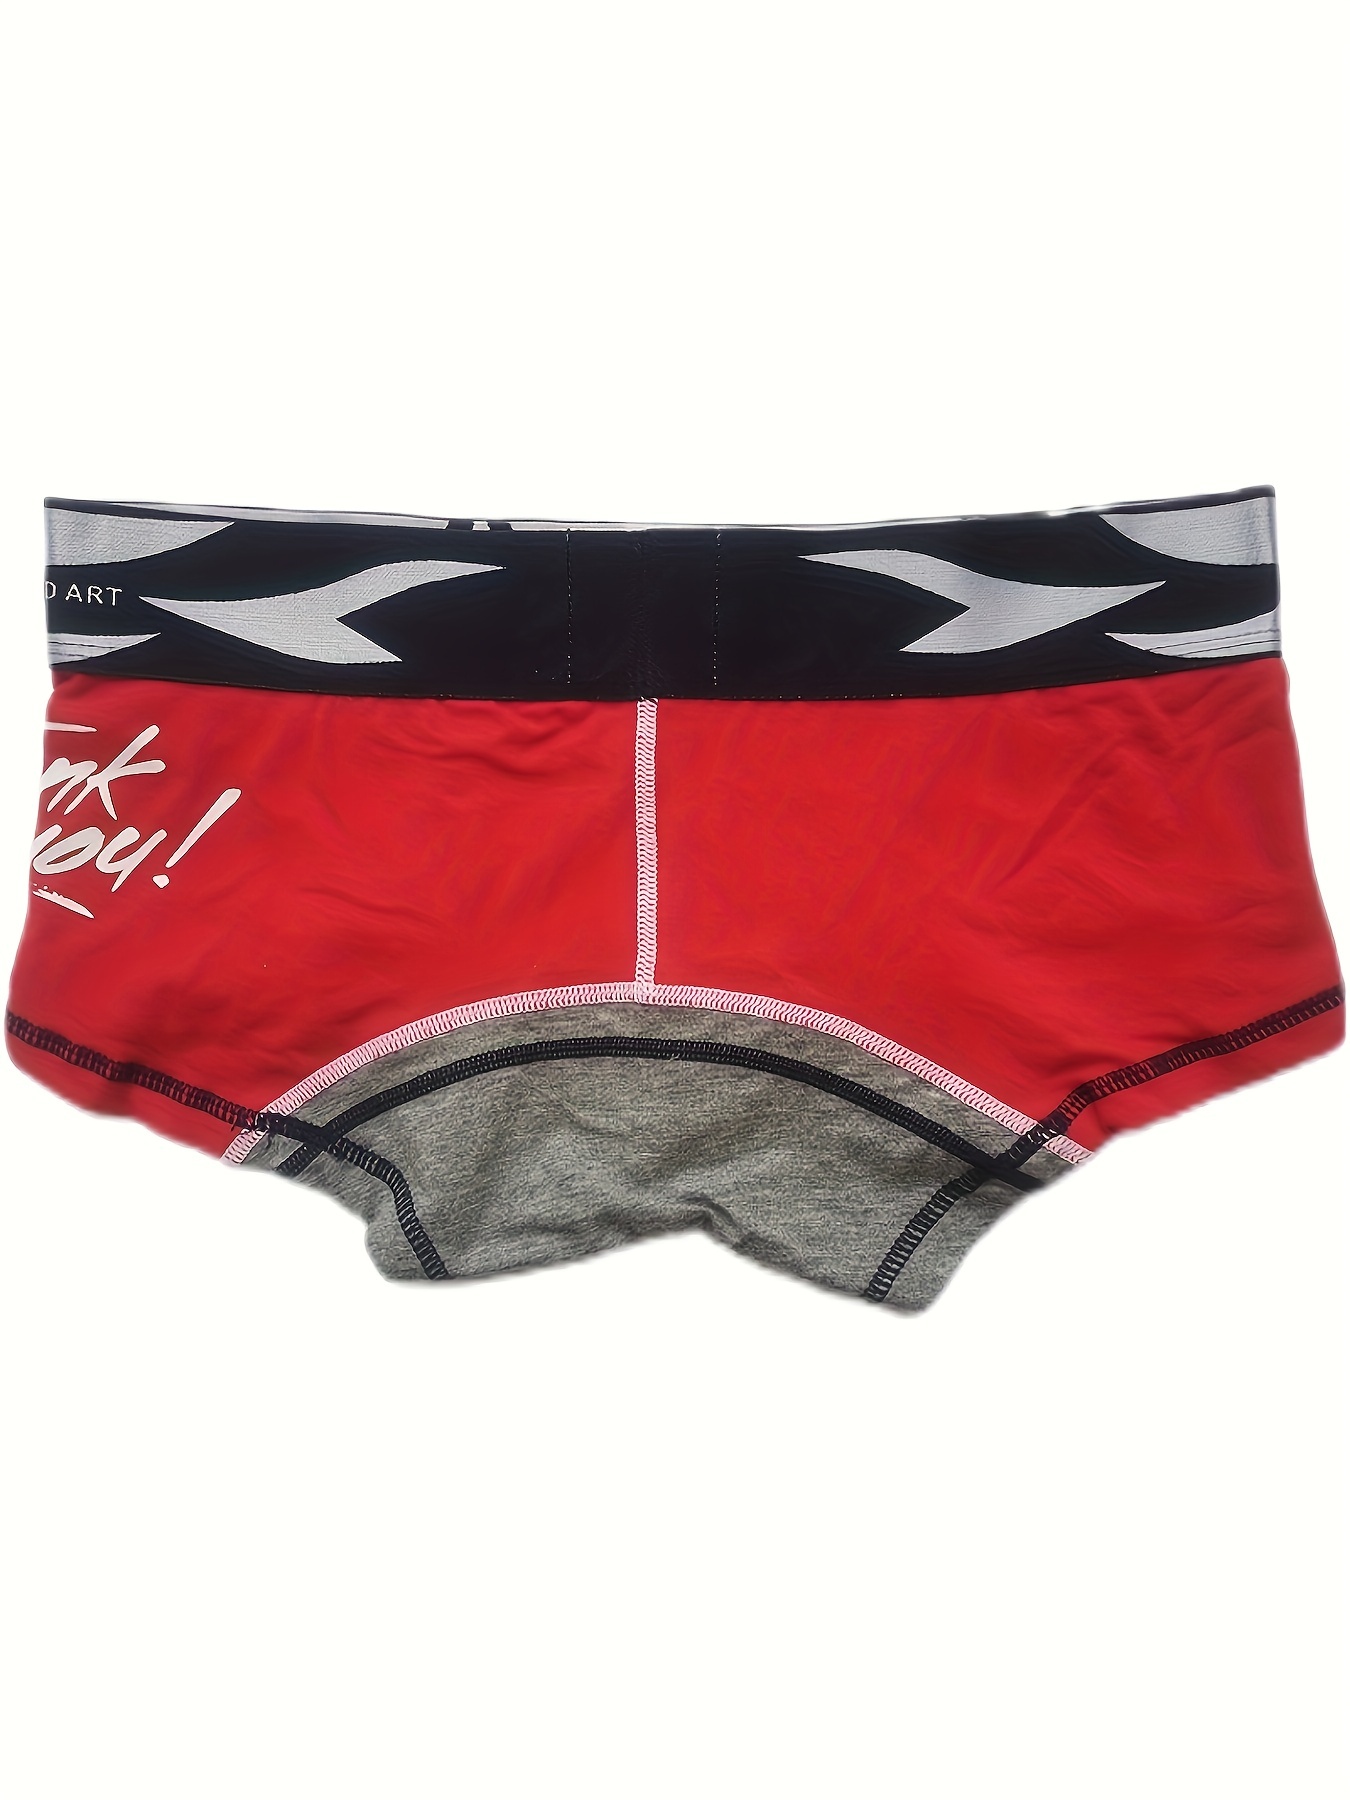 Men's Open Front Underwear Sexy U Convex Pouch Boxer Shorts